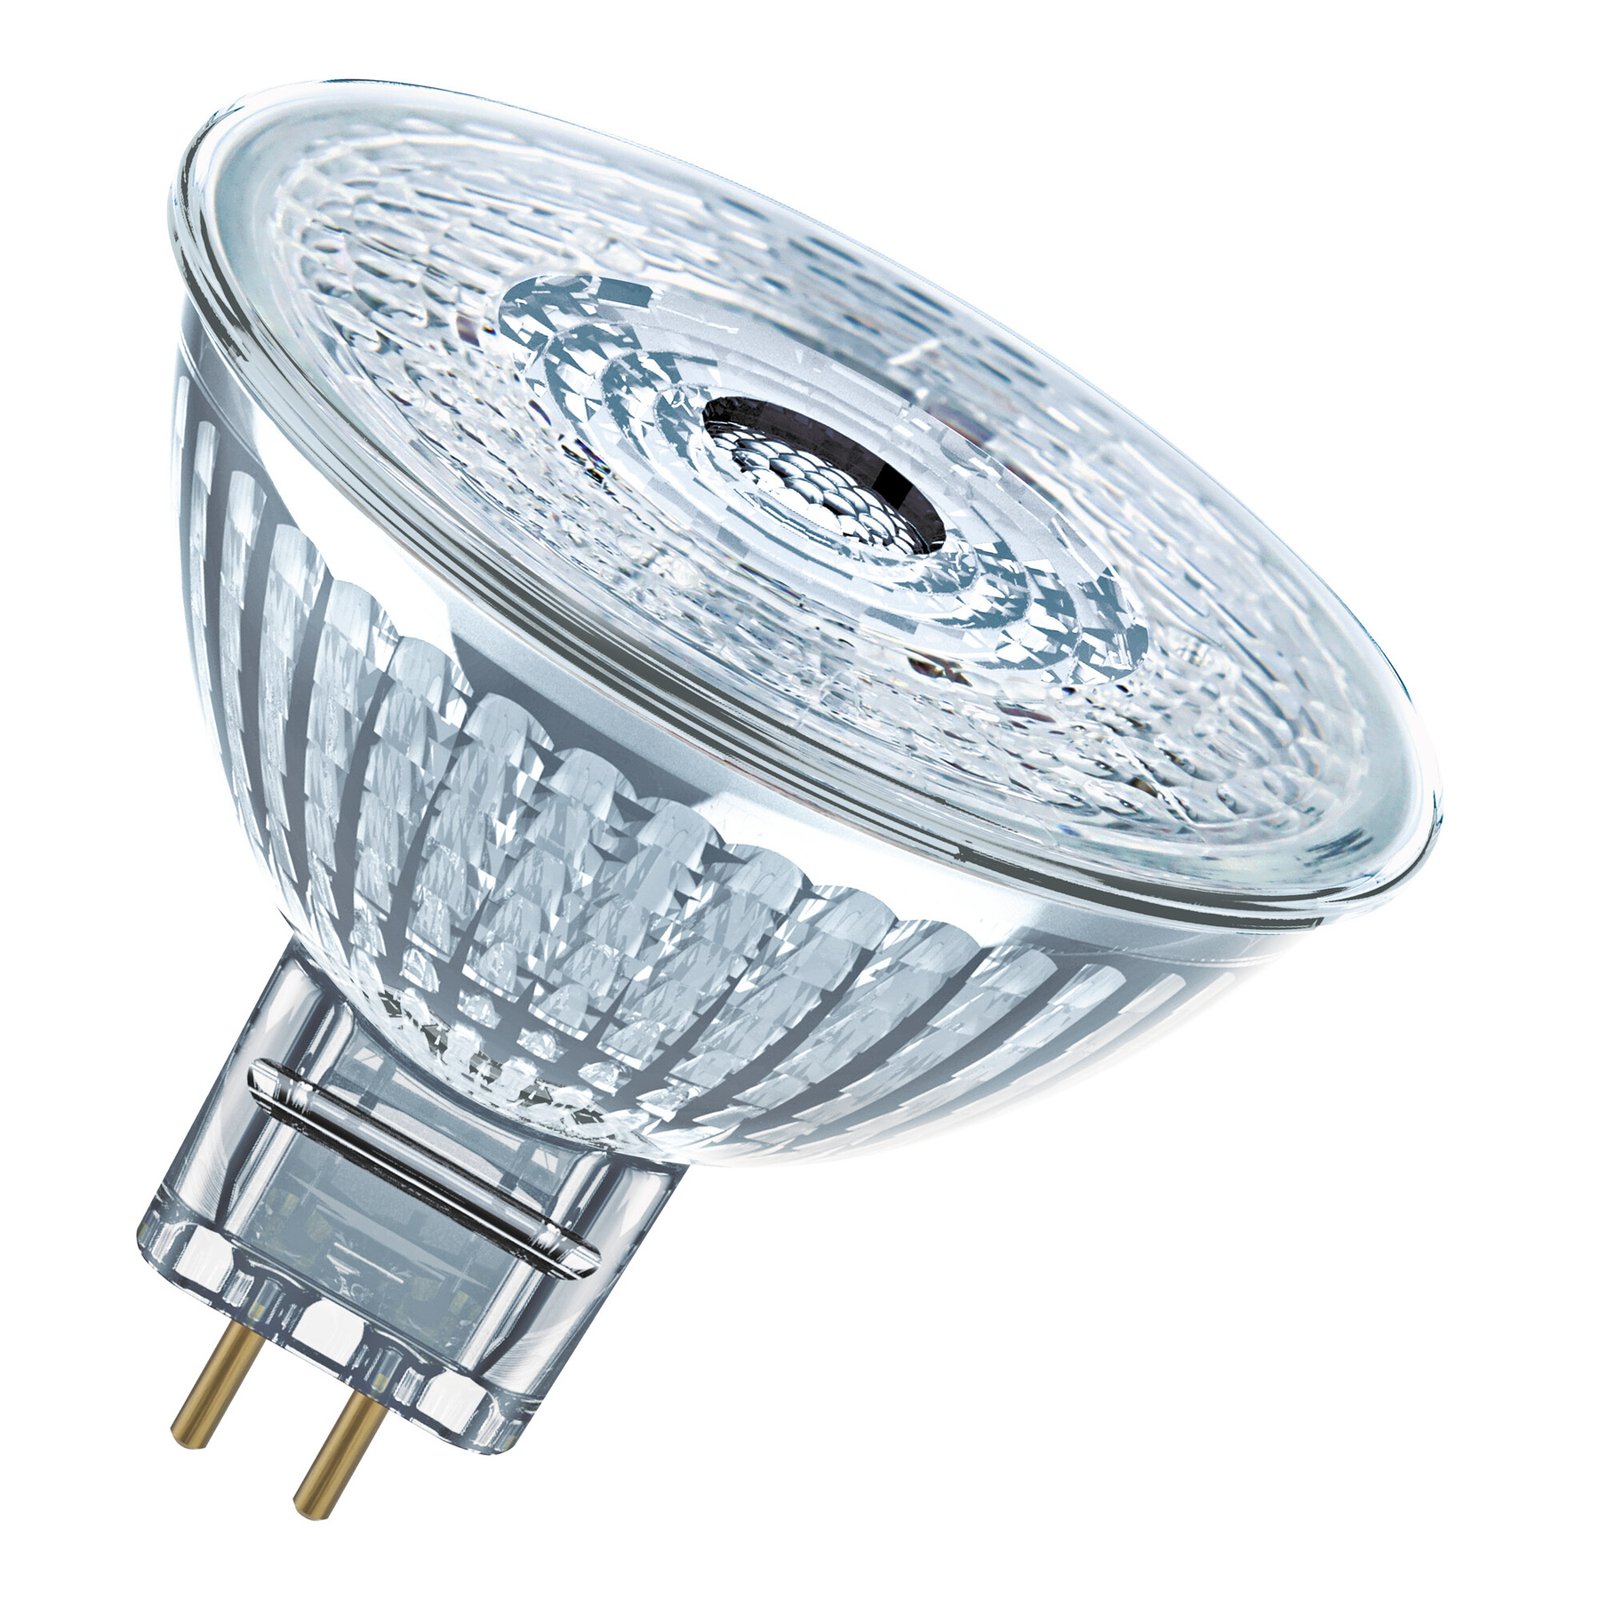 OSRAM LED reflector GU5,3 3,4W 927 36° 12V dimbaar